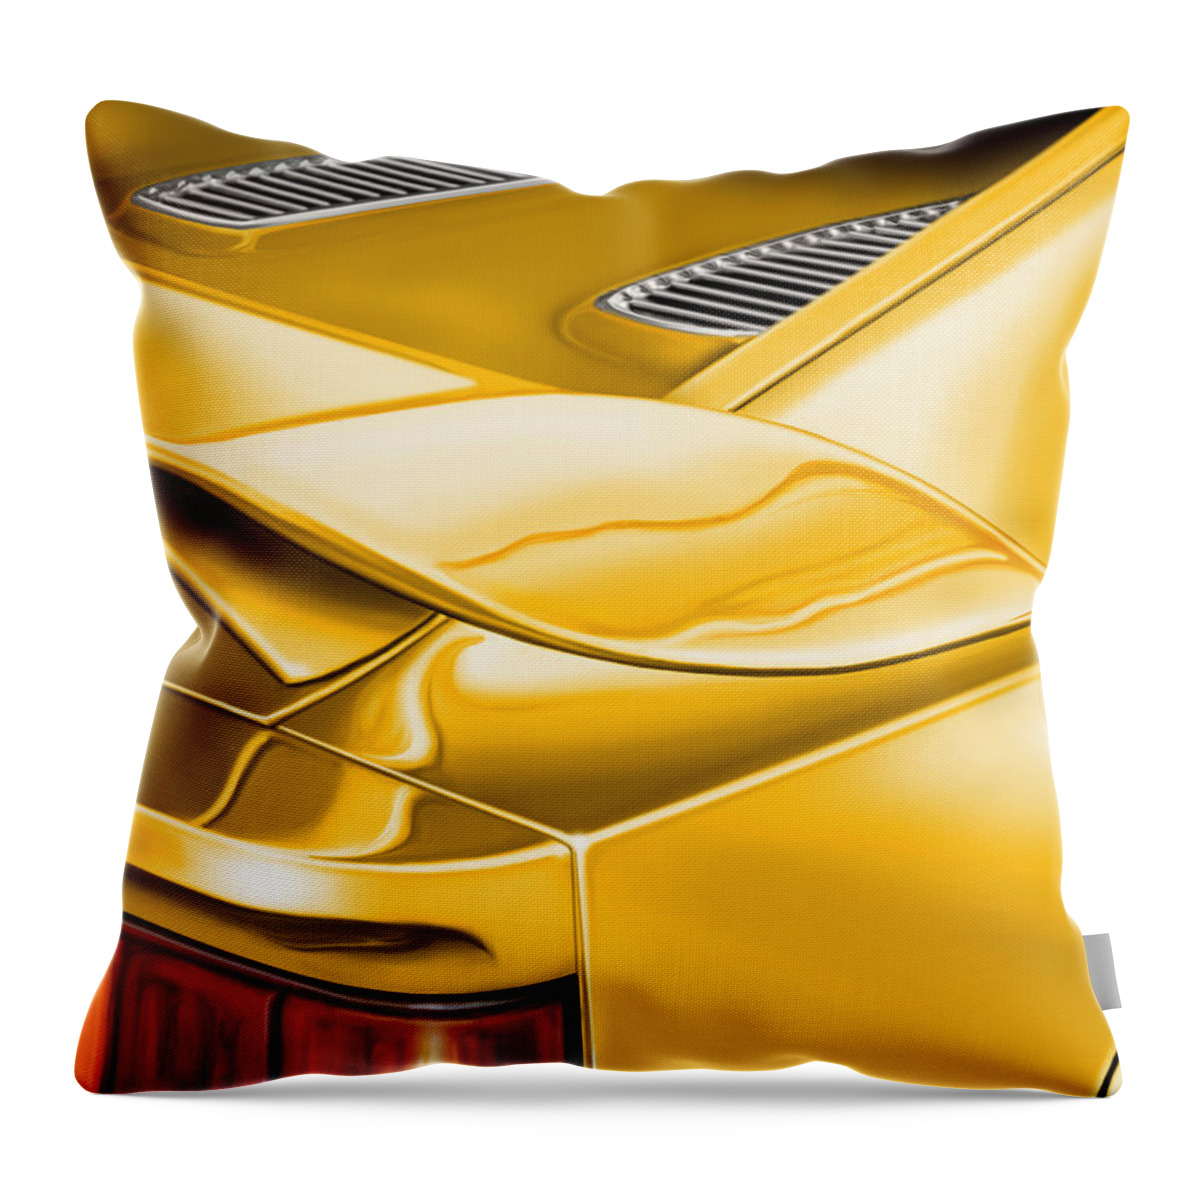 Lotus Throw Pillow featuring the digital art Lotus Esprit Detail by David Kyte